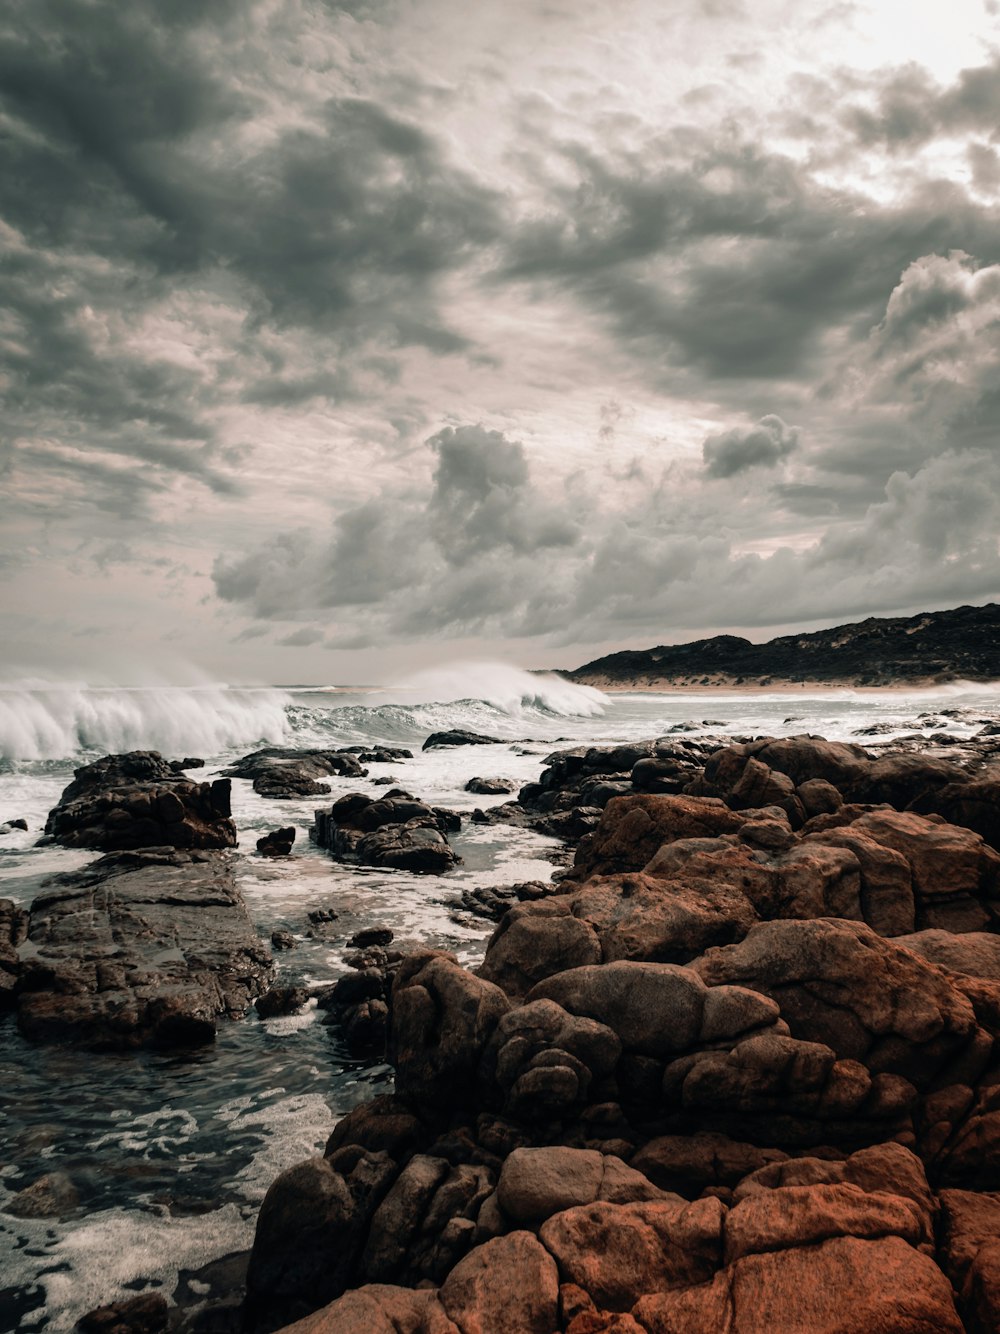 sea waves crashing on rocks under dramatic clouds